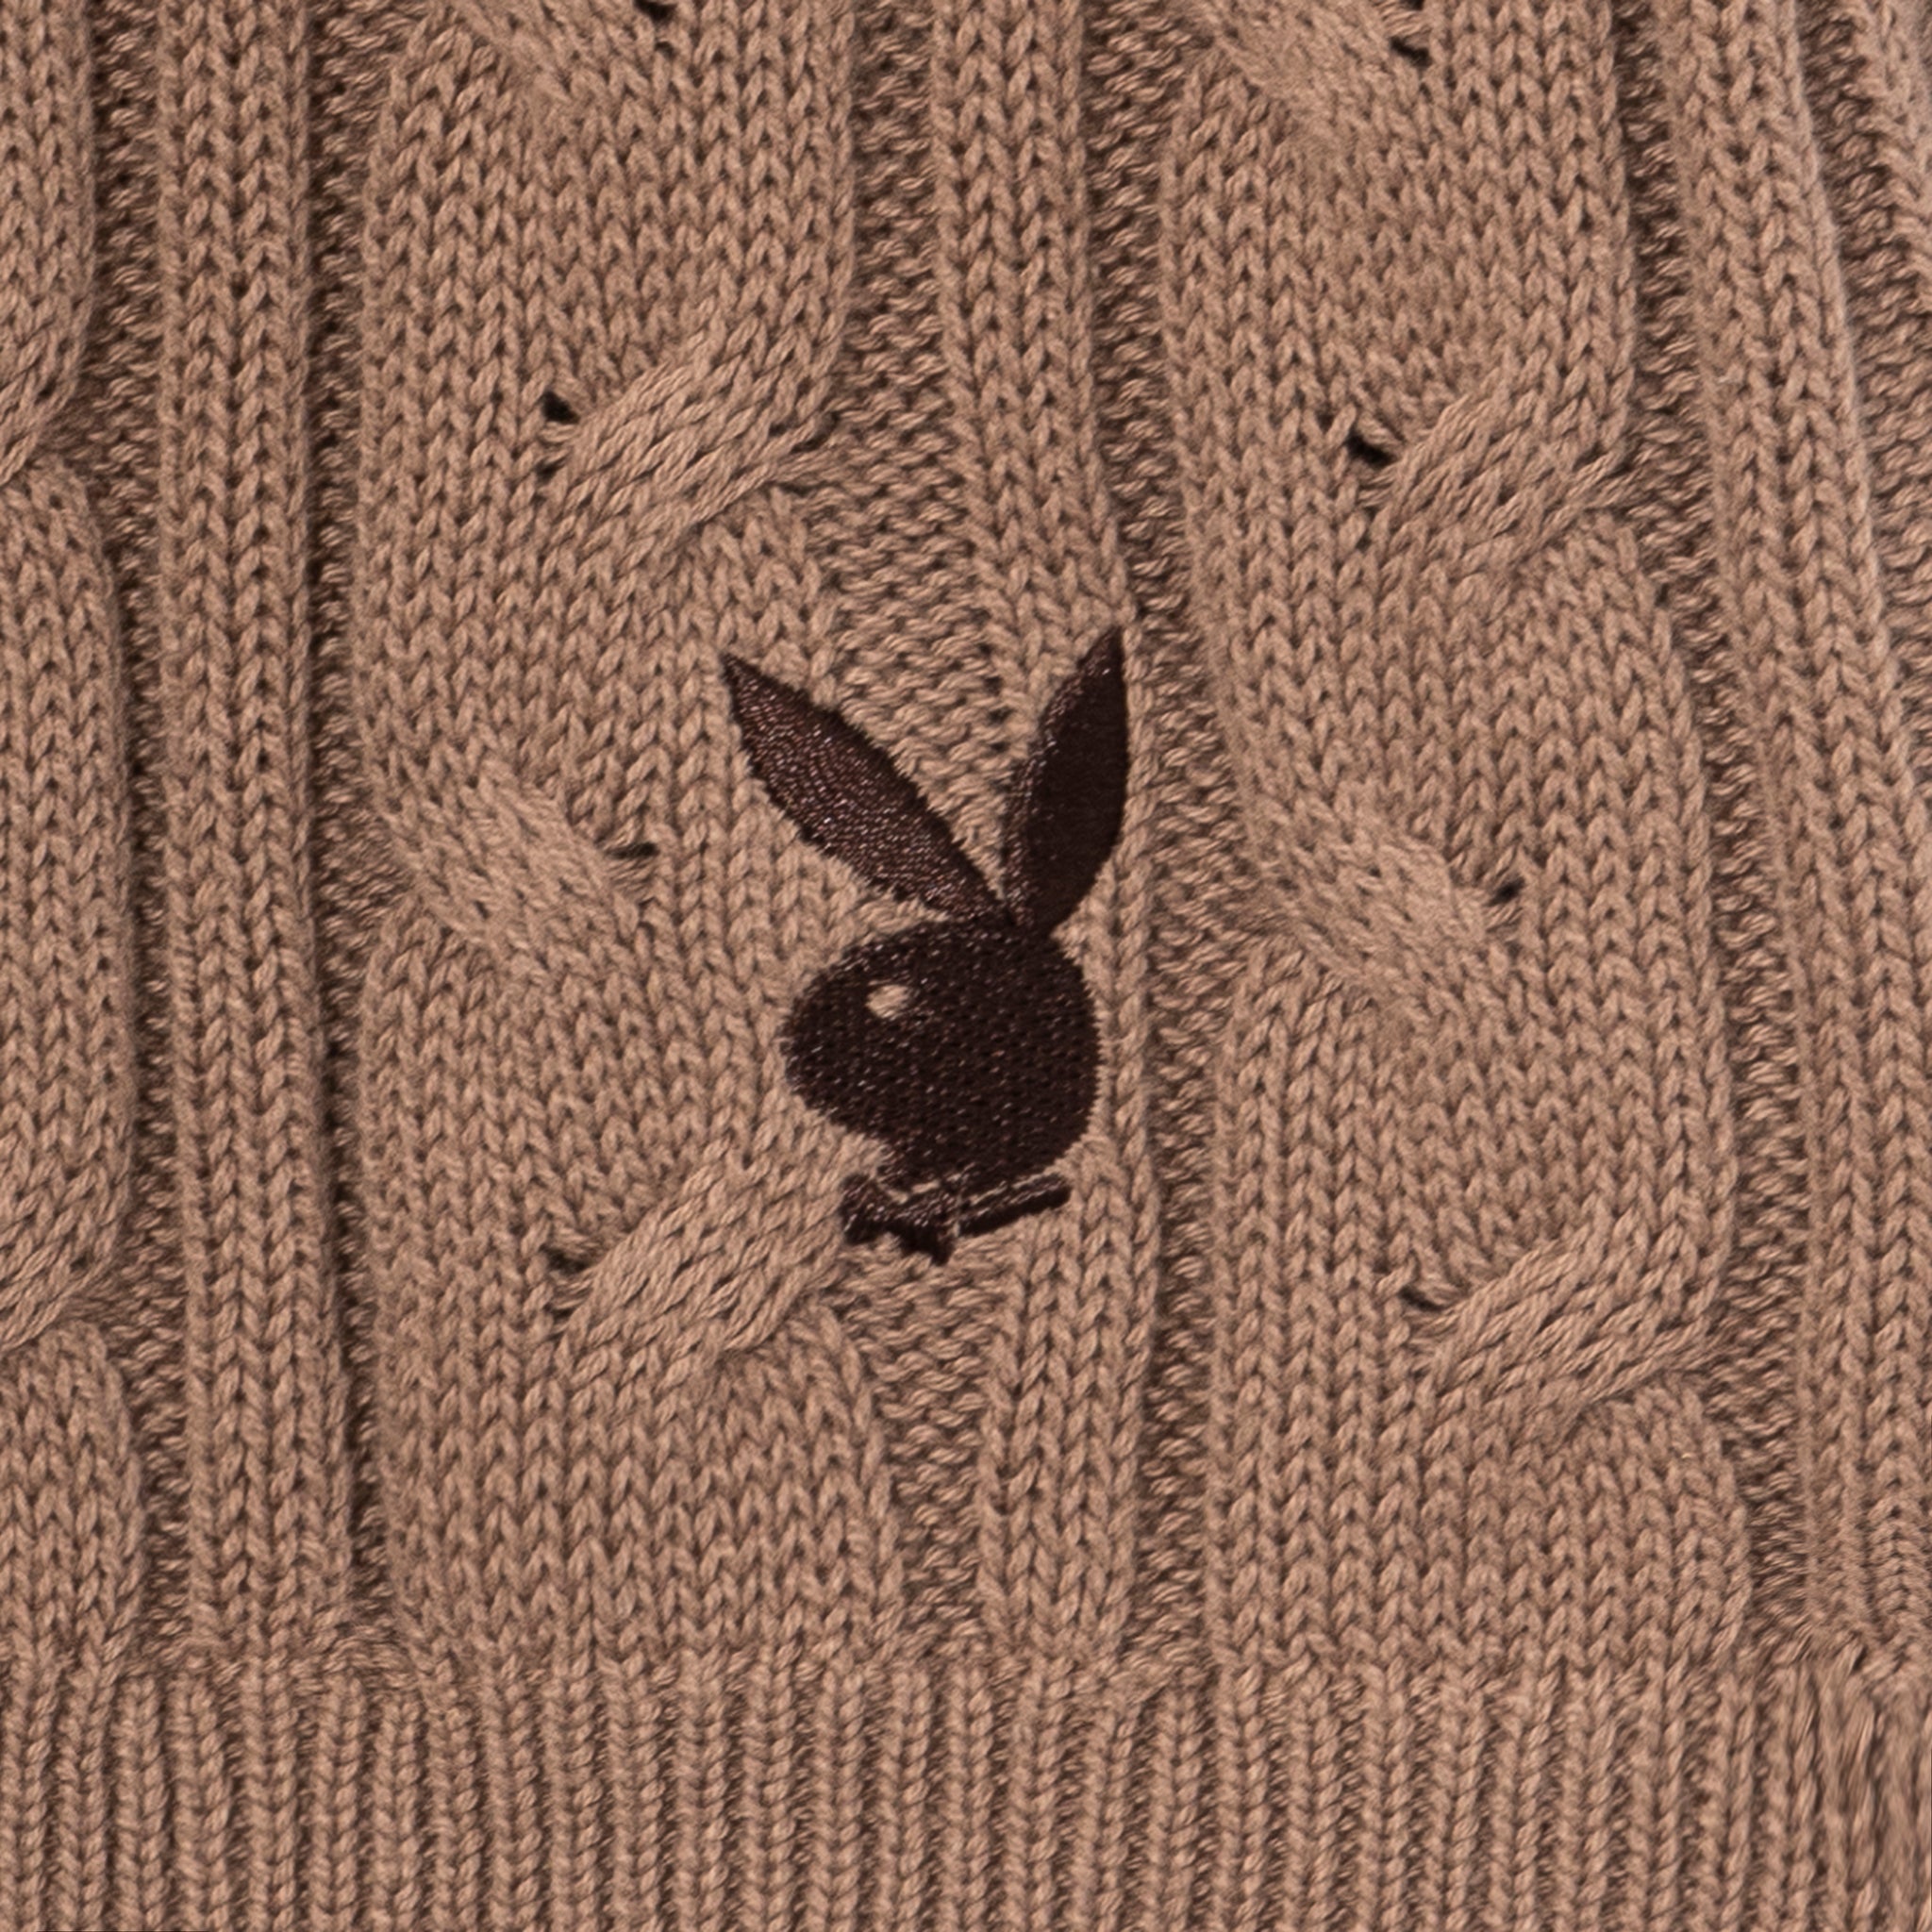 Playboy Bunny X Louis Vuitton Art